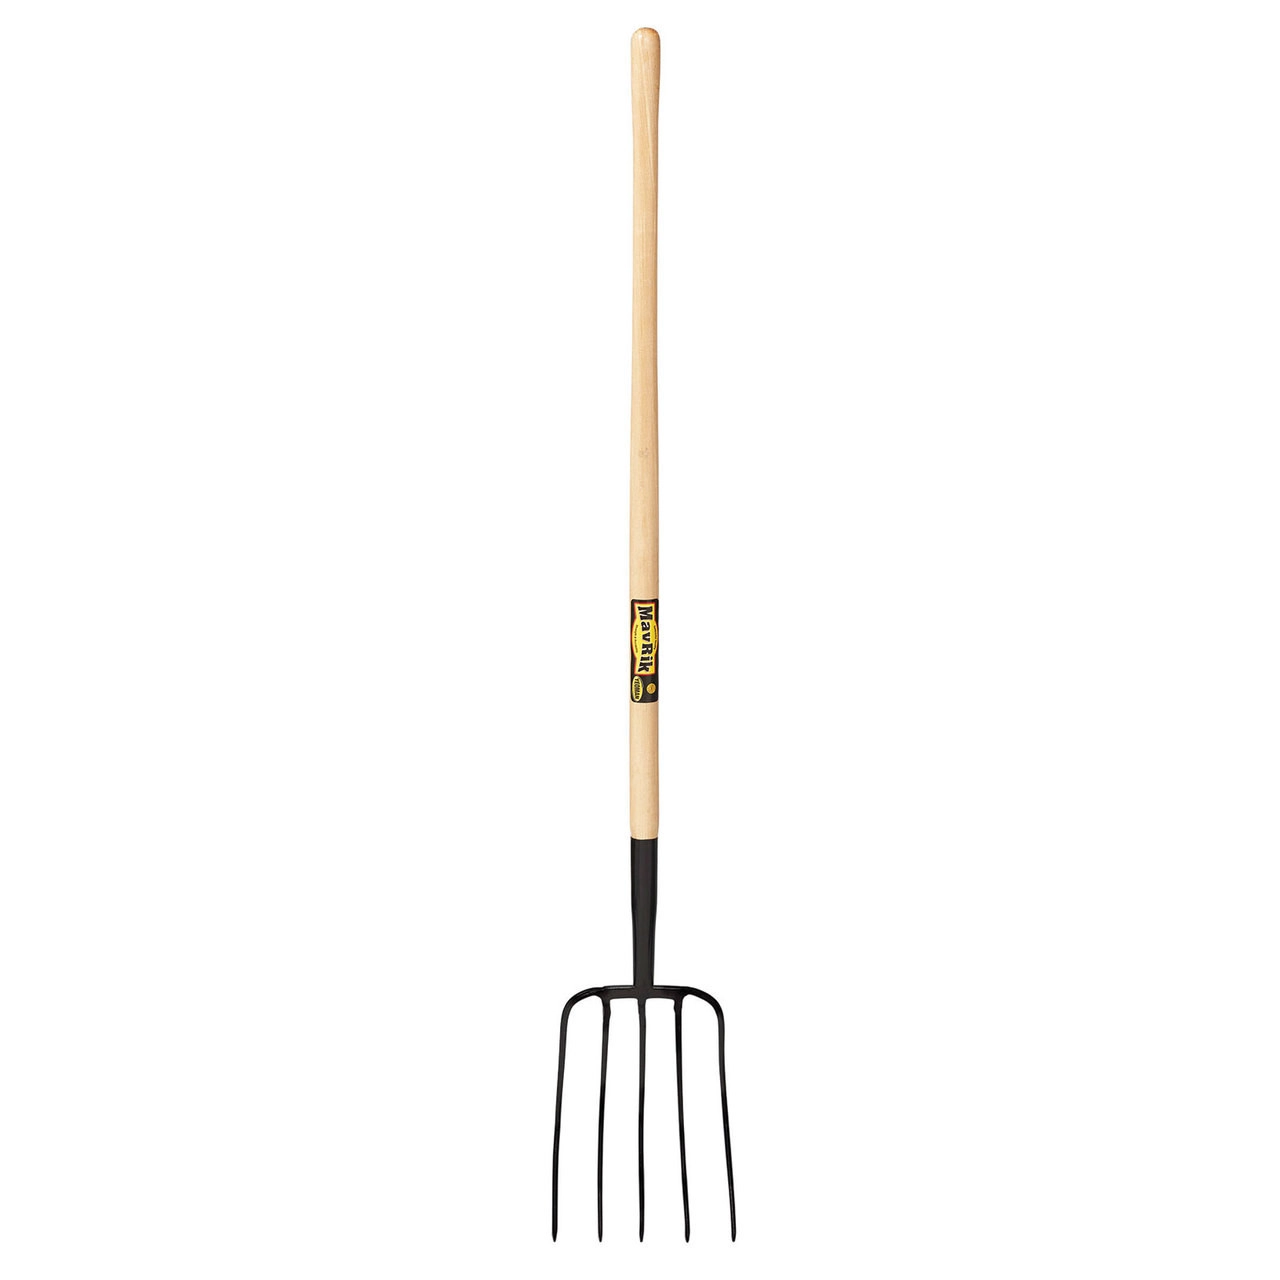 5 Tine Manure Fork 48” Wood Handle